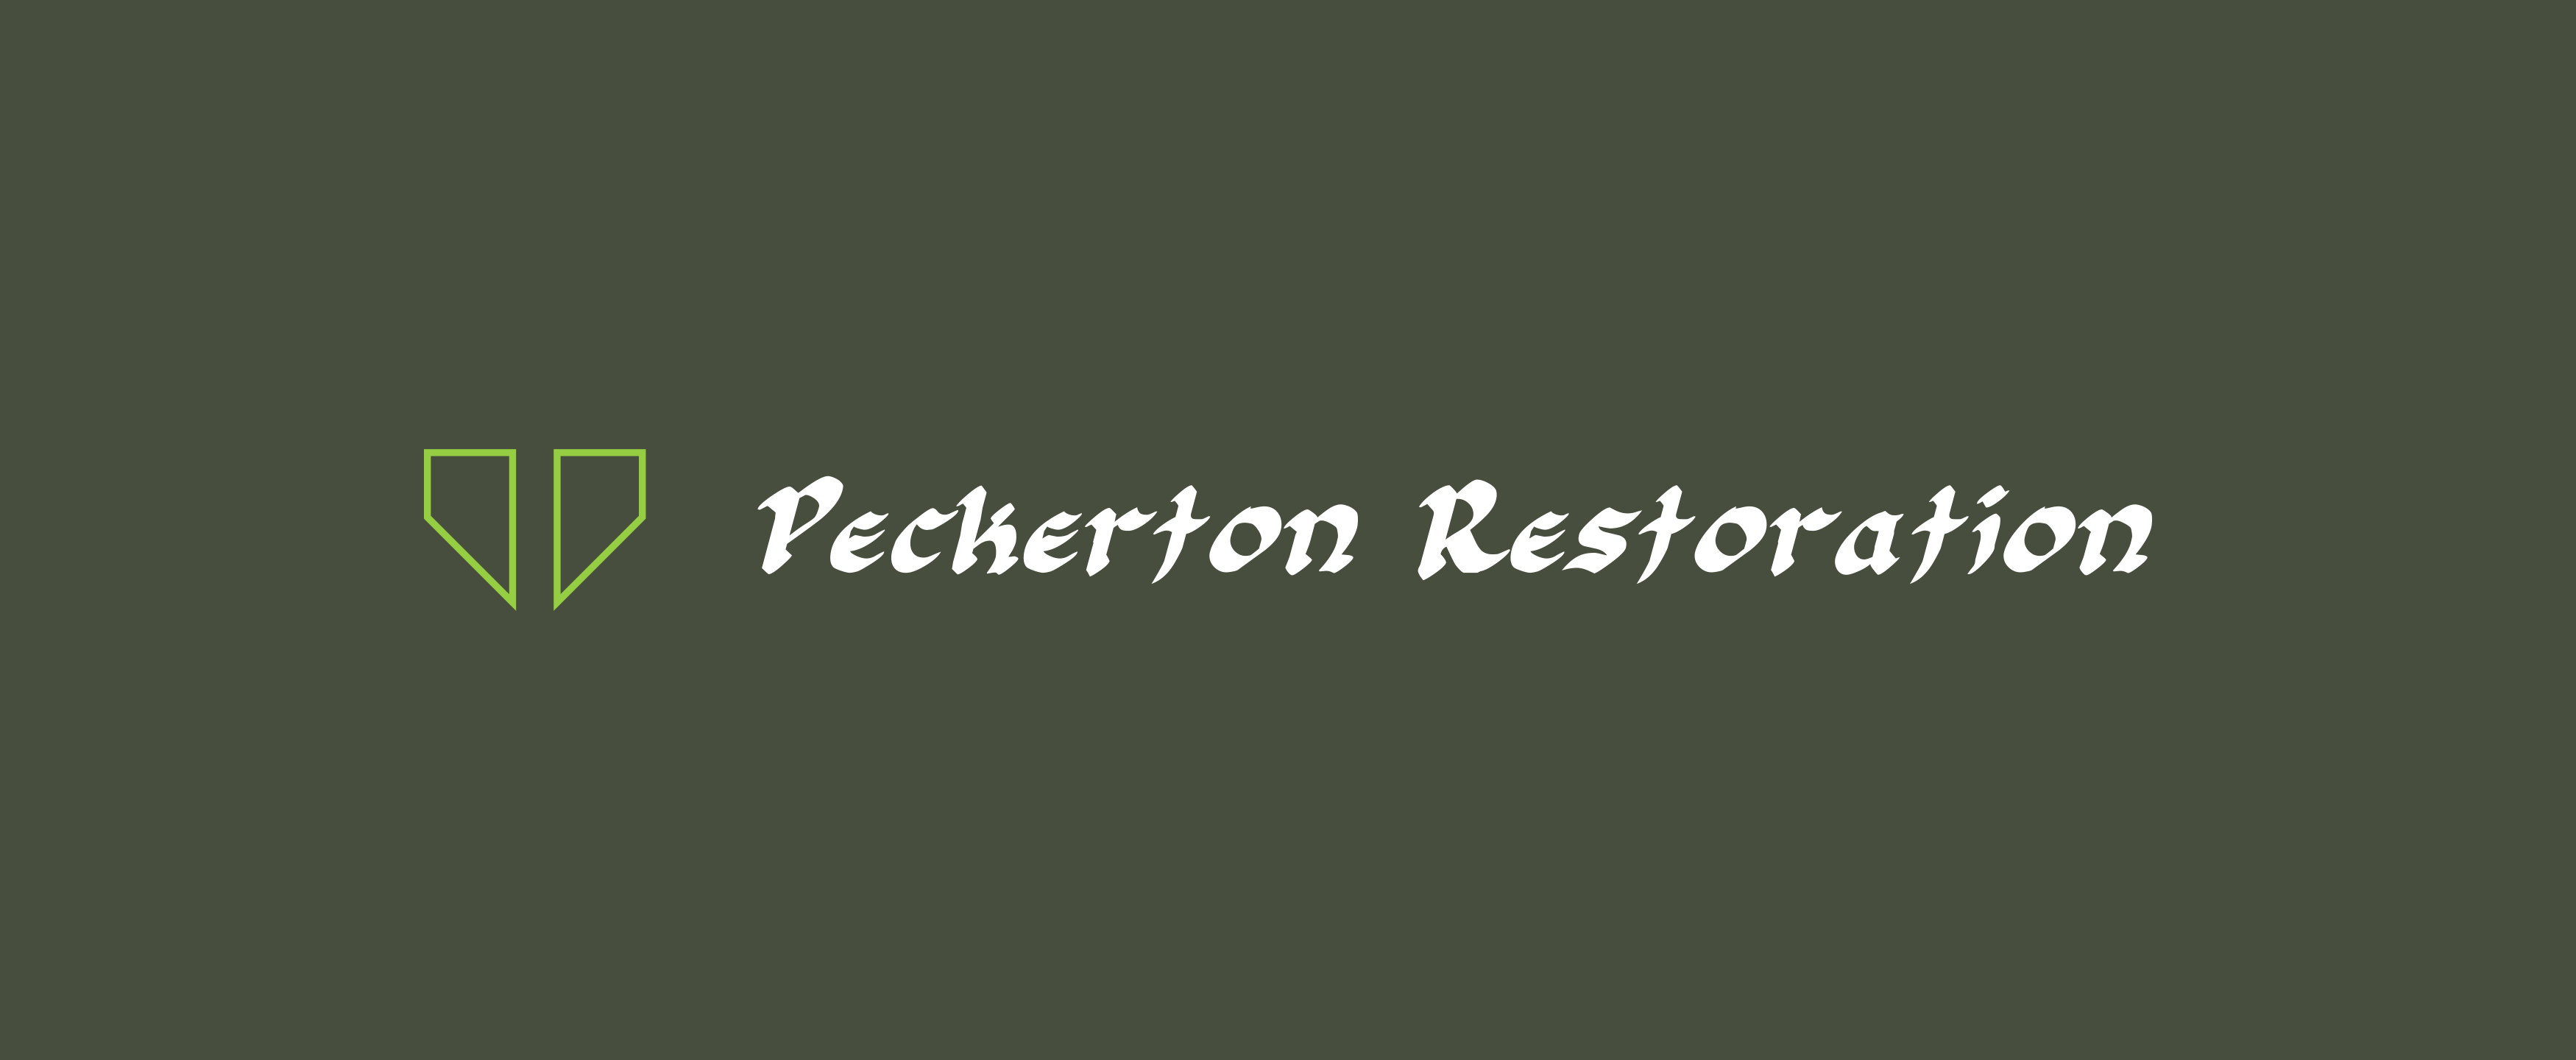 Peckerton Restoration | (863) 328-5225